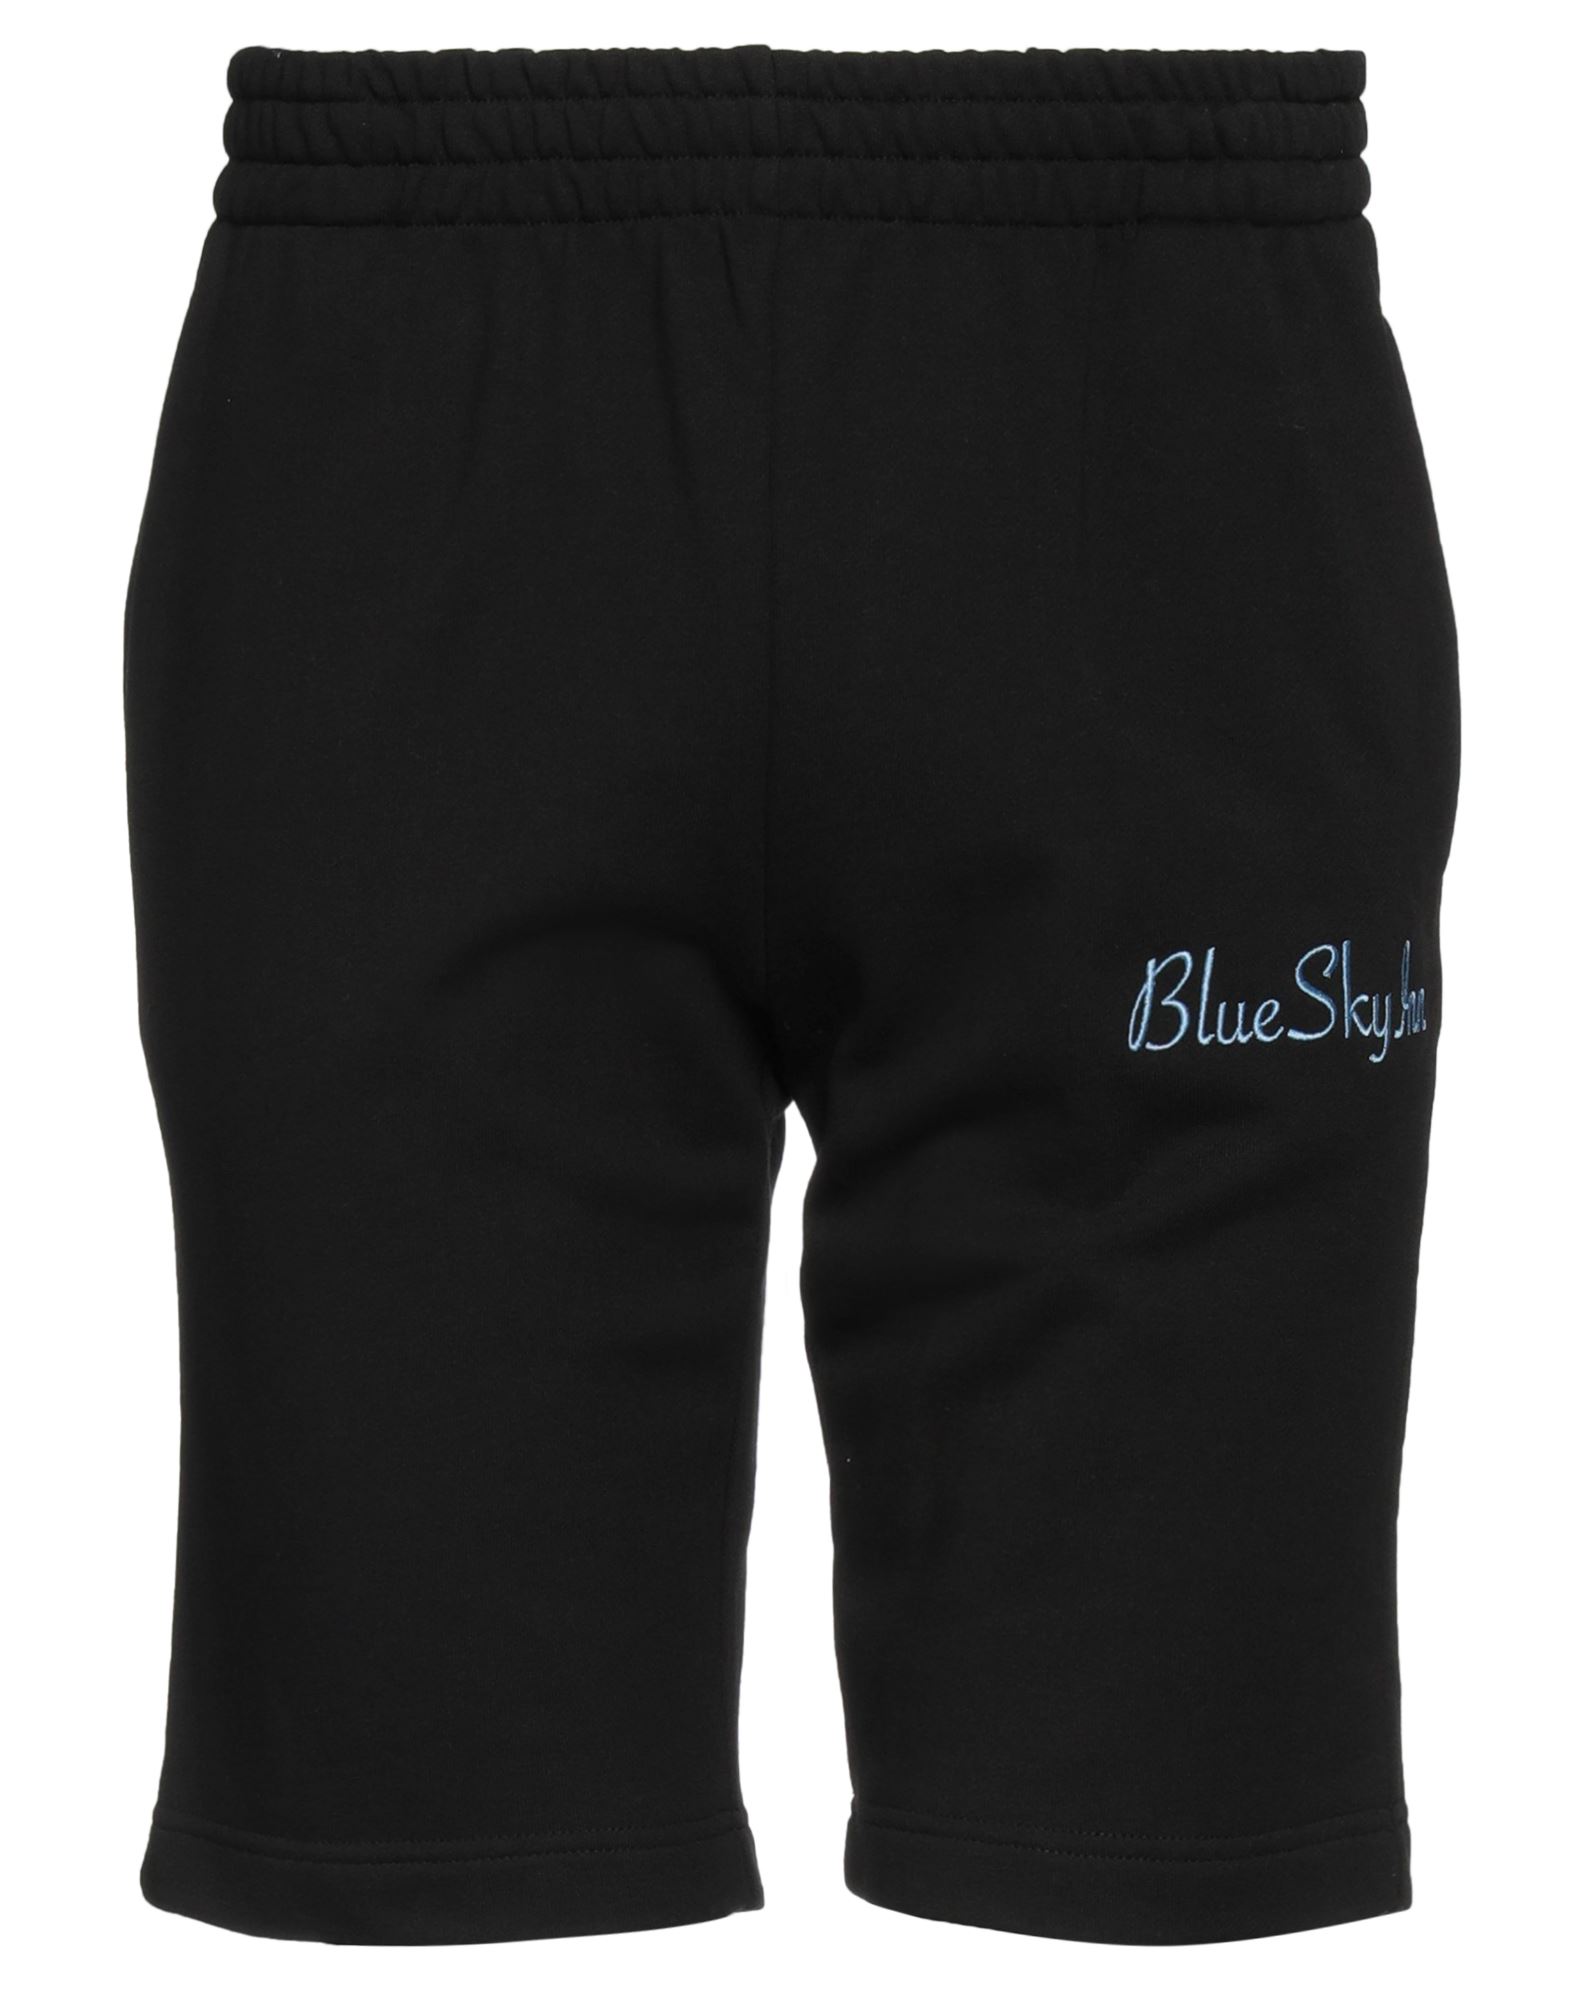 BLUE SKY INN Shorts & Bermudashorts Herren Schwarz von BLUE SKY INN